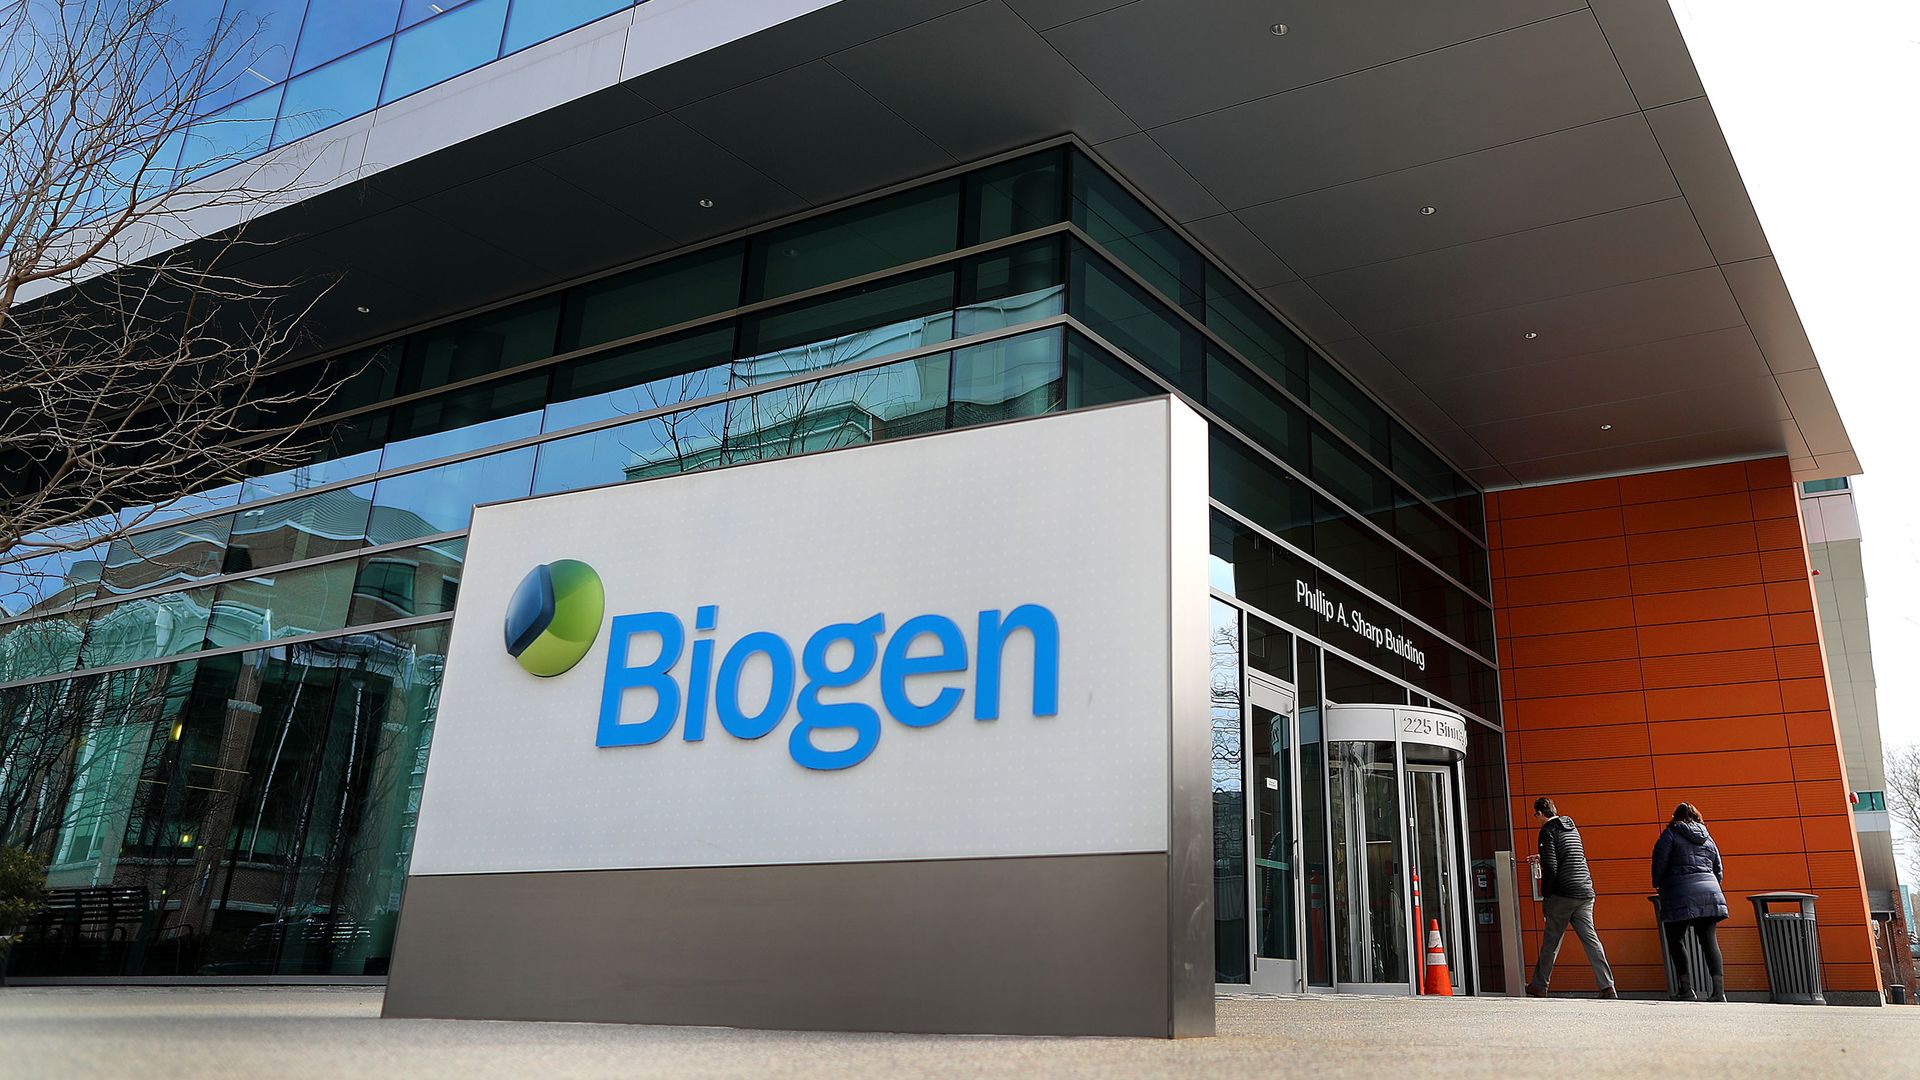 A Biogen sign in front of the Biogen headquarters building.